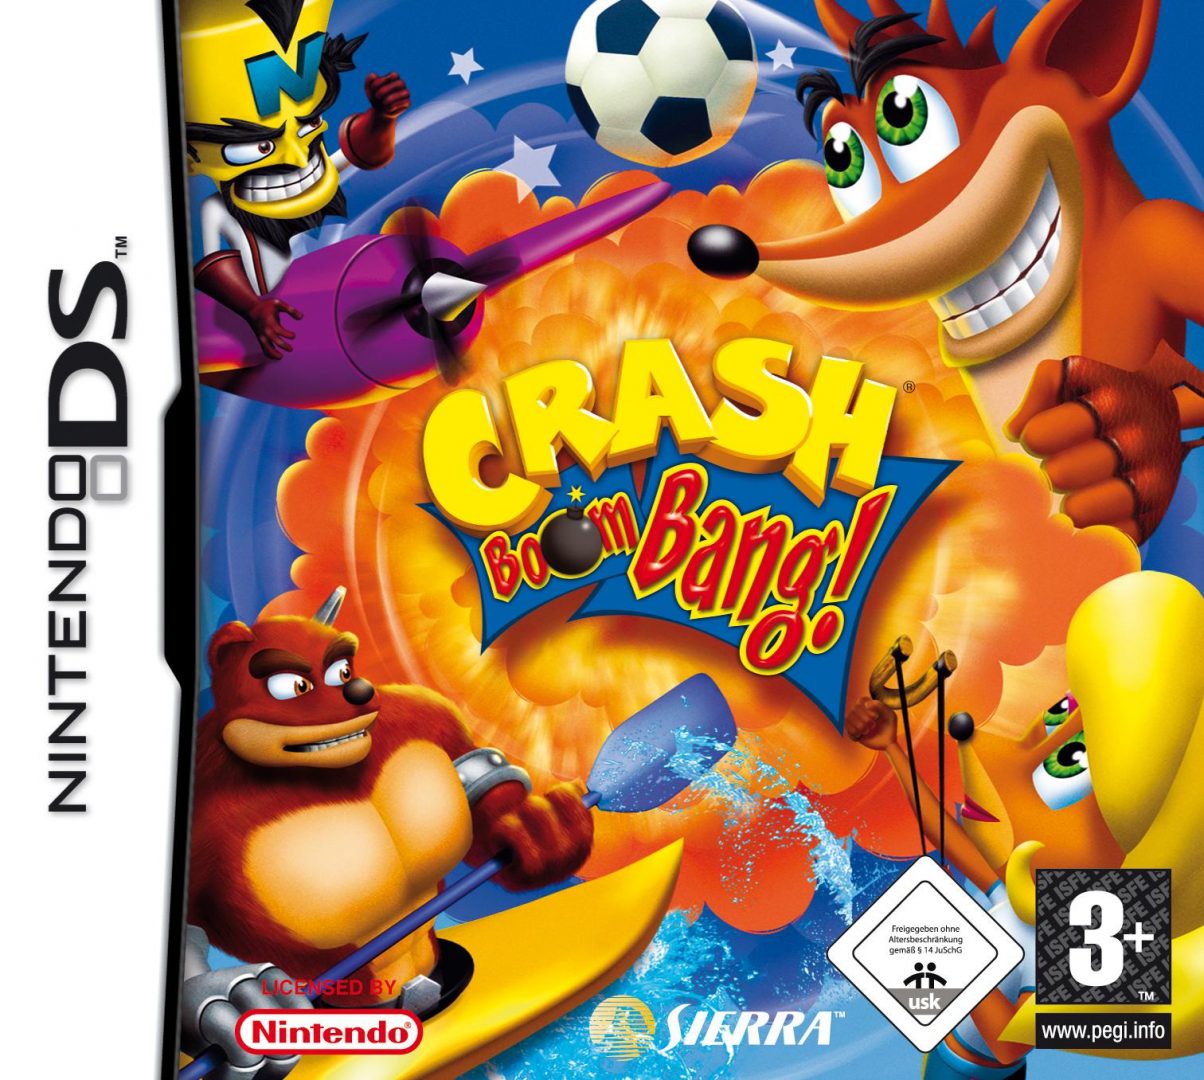 The coverart image of Crash Boom Bang!